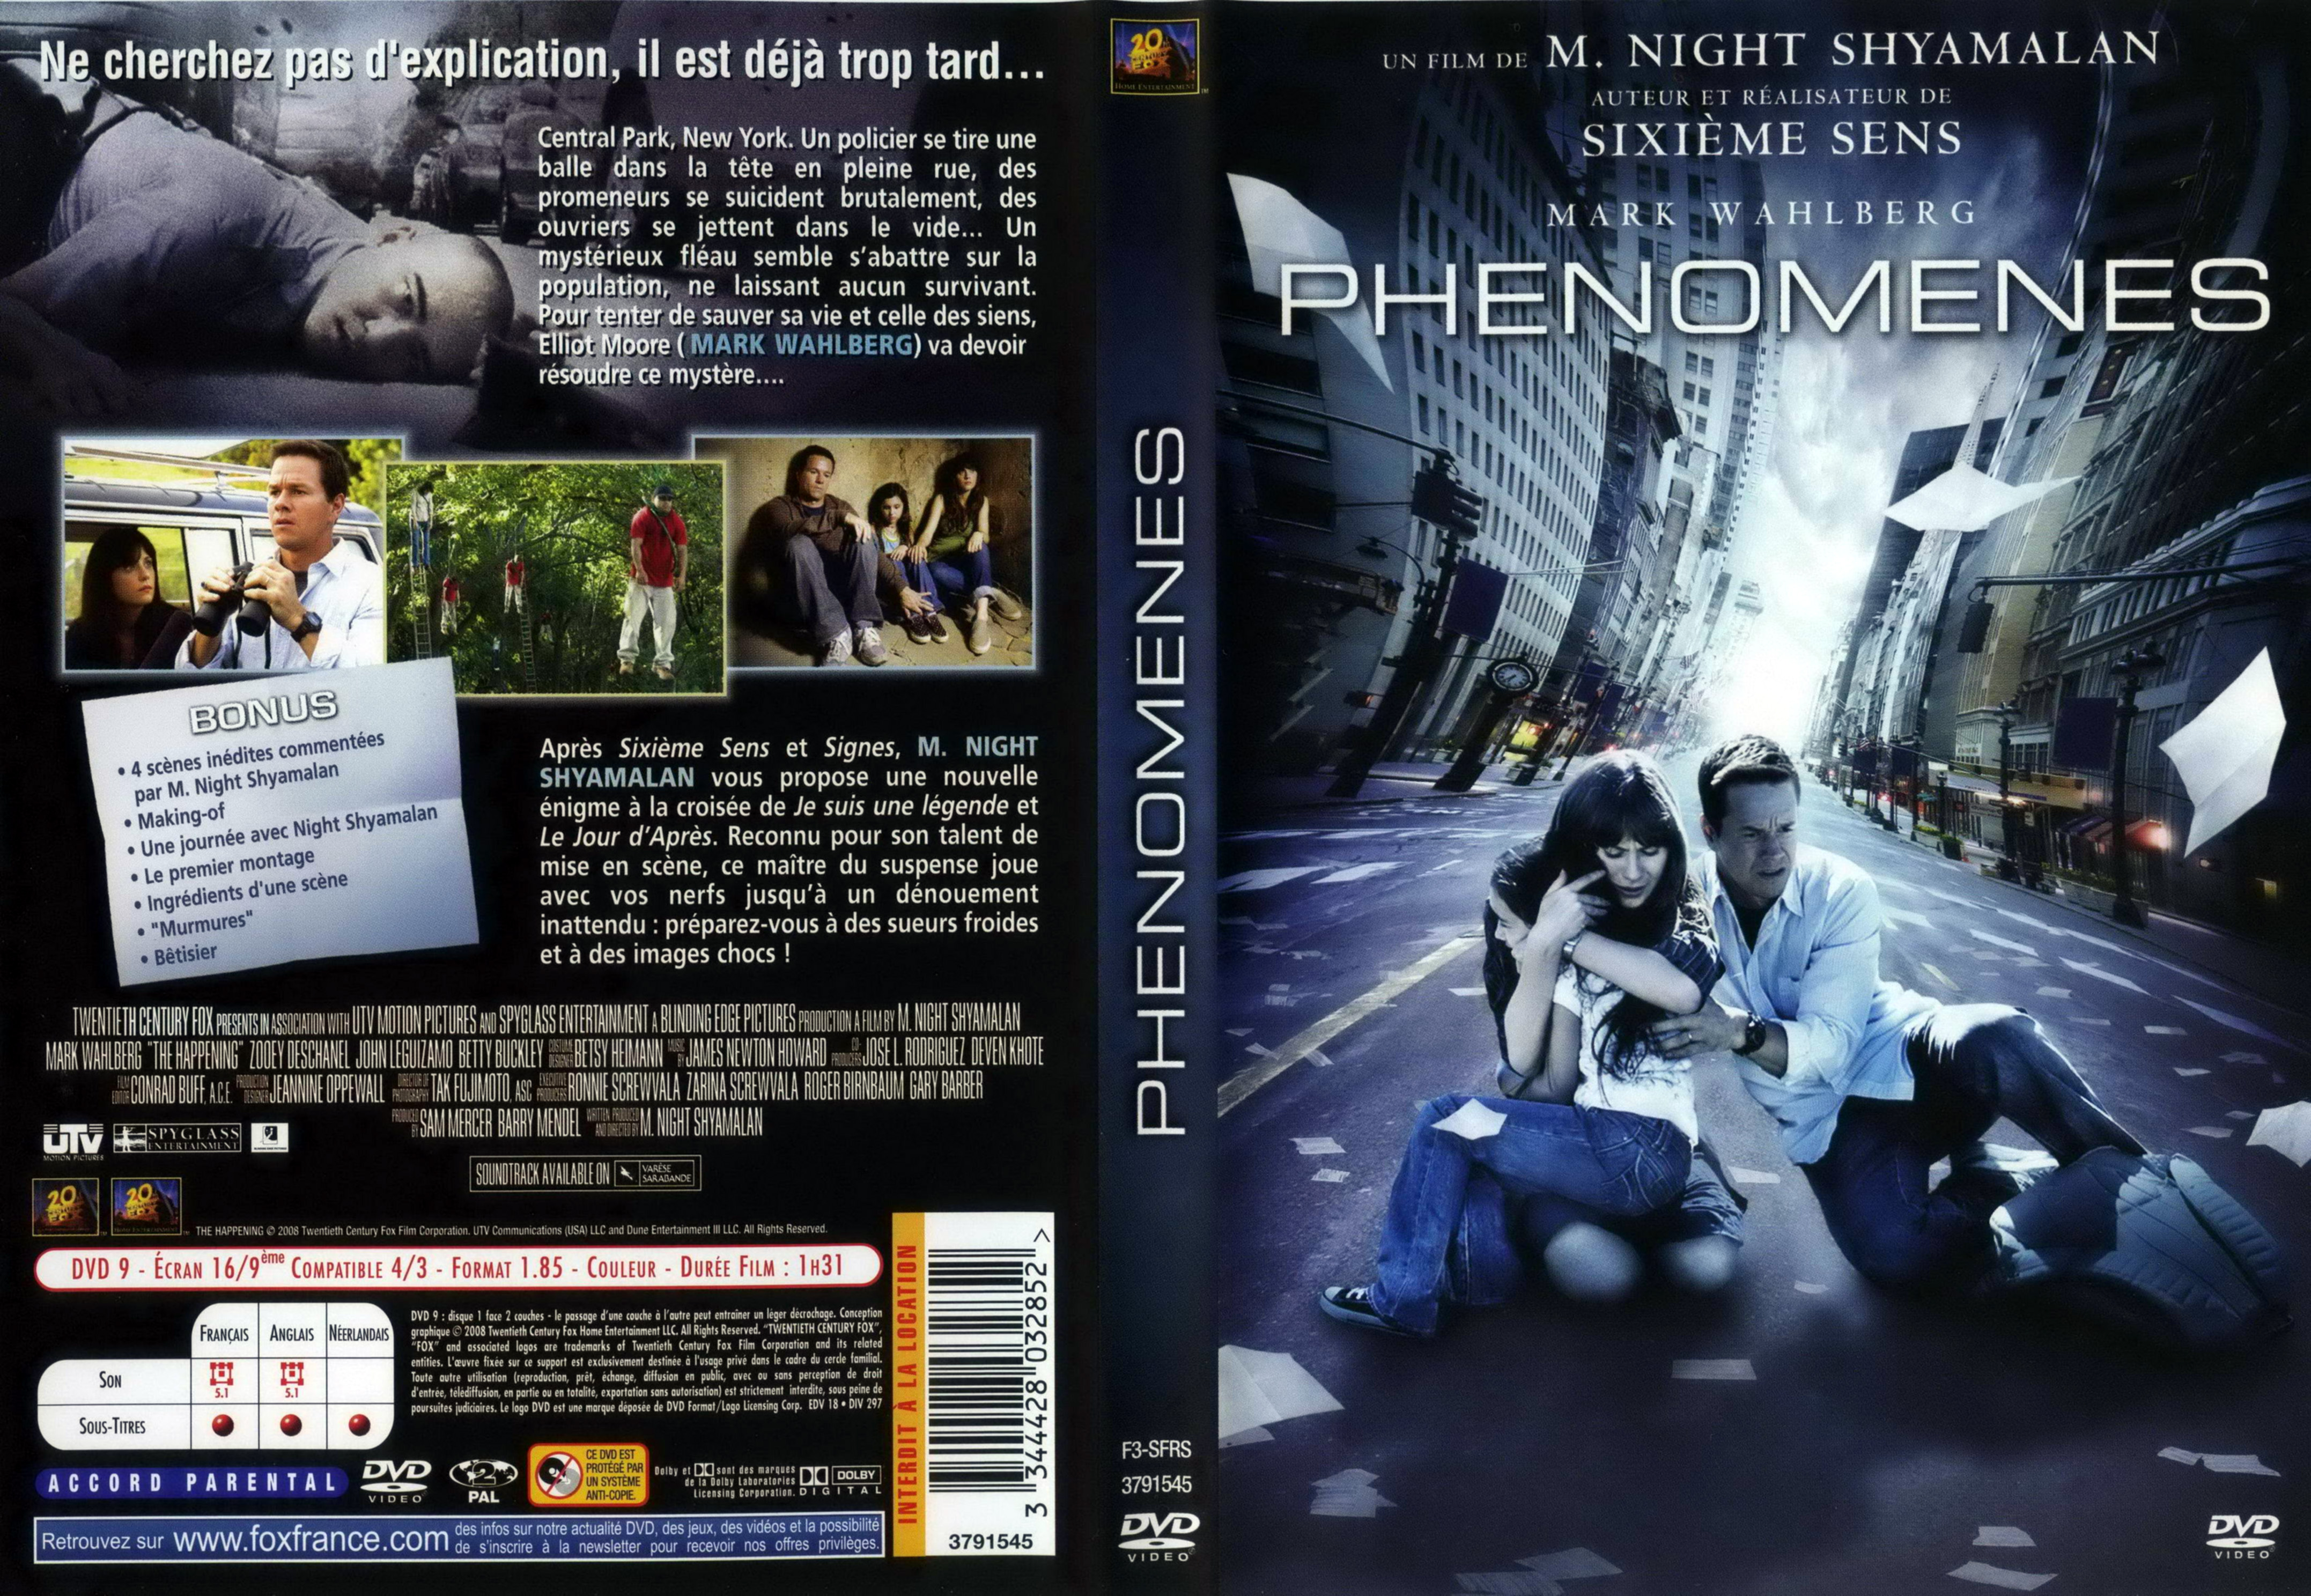 Jaquette DVD Phnomnes v2